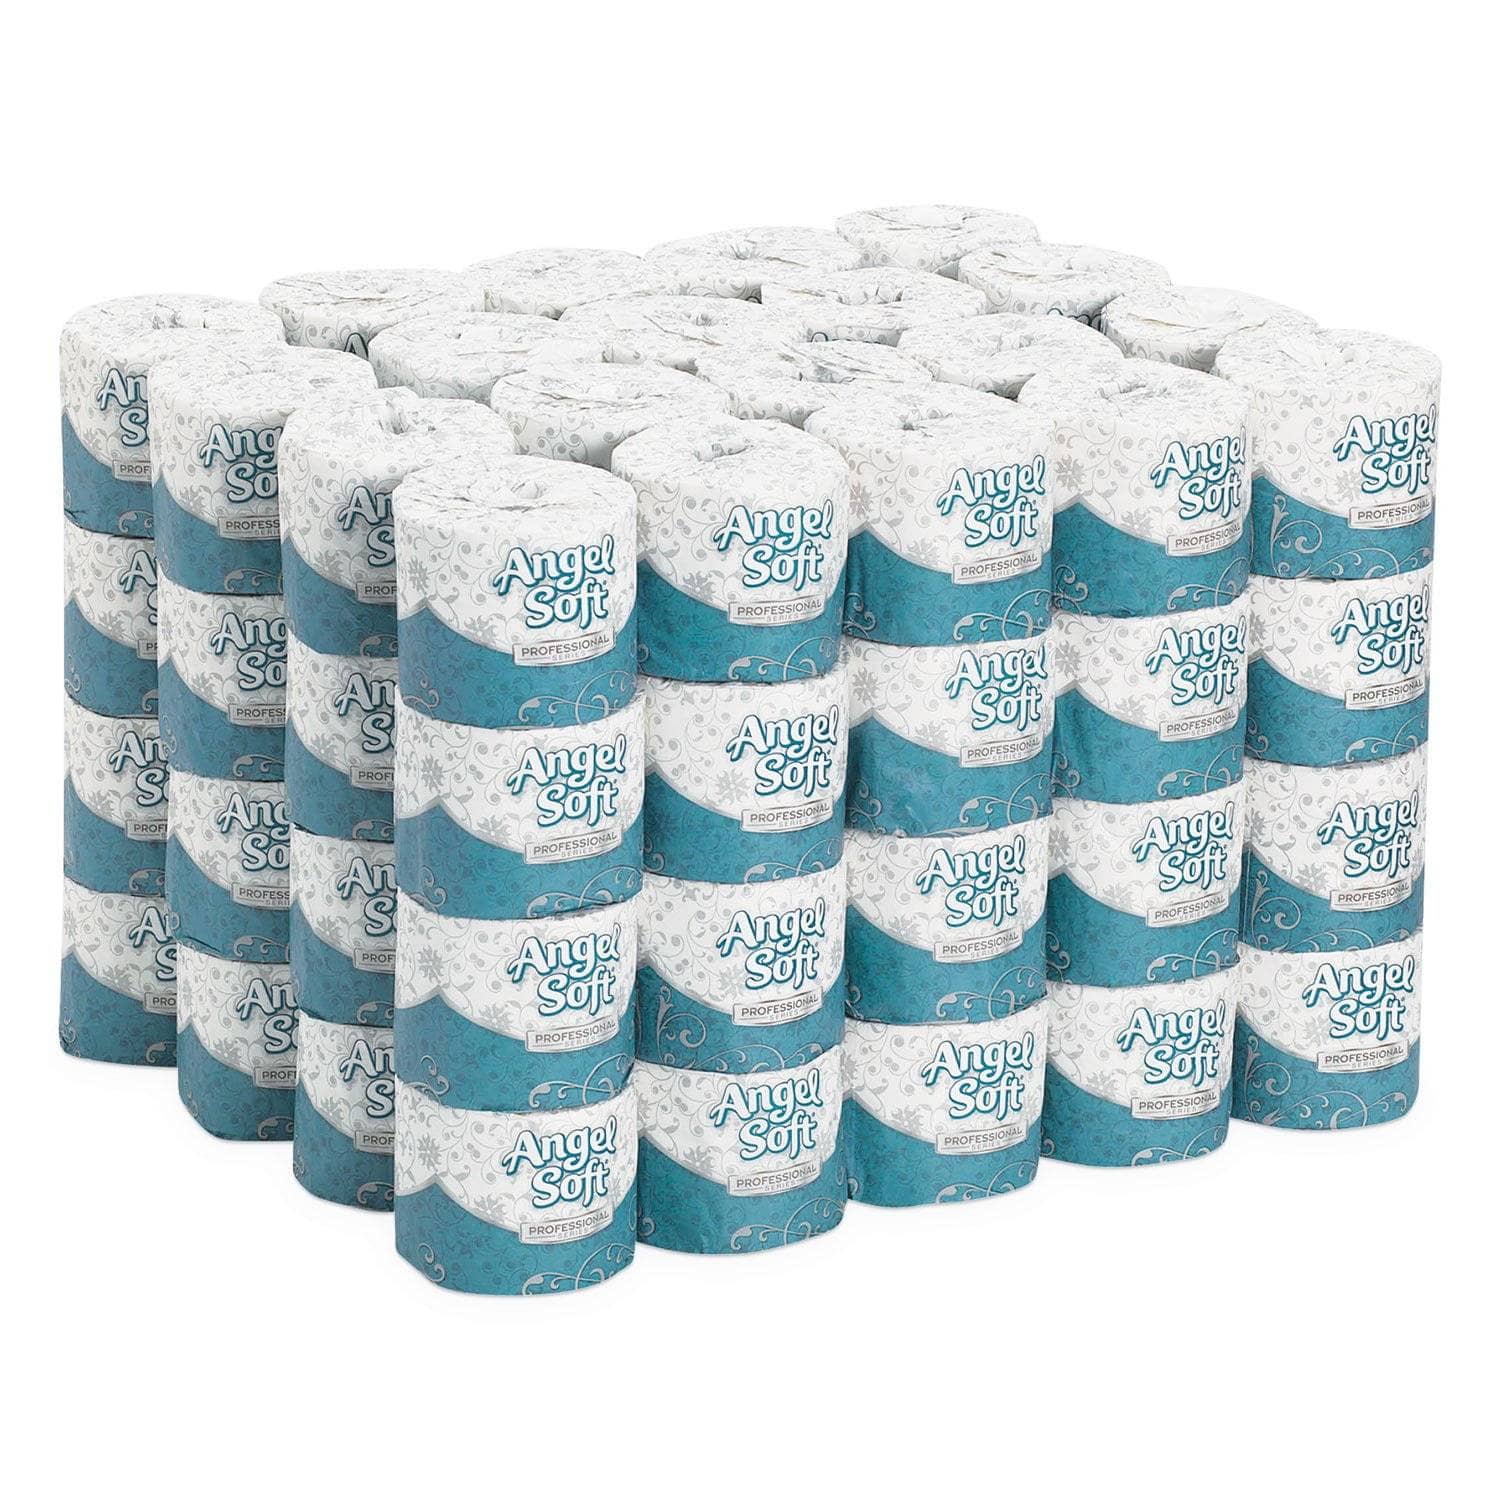 Georgia Pacific Angel Soft Ps Premium Bathroom Tissue, Septic Safe, 2-Ply, White, 450 Sheets/Roll, 80 Rolls/Carton - GPC16880 - TotalRestroom.com